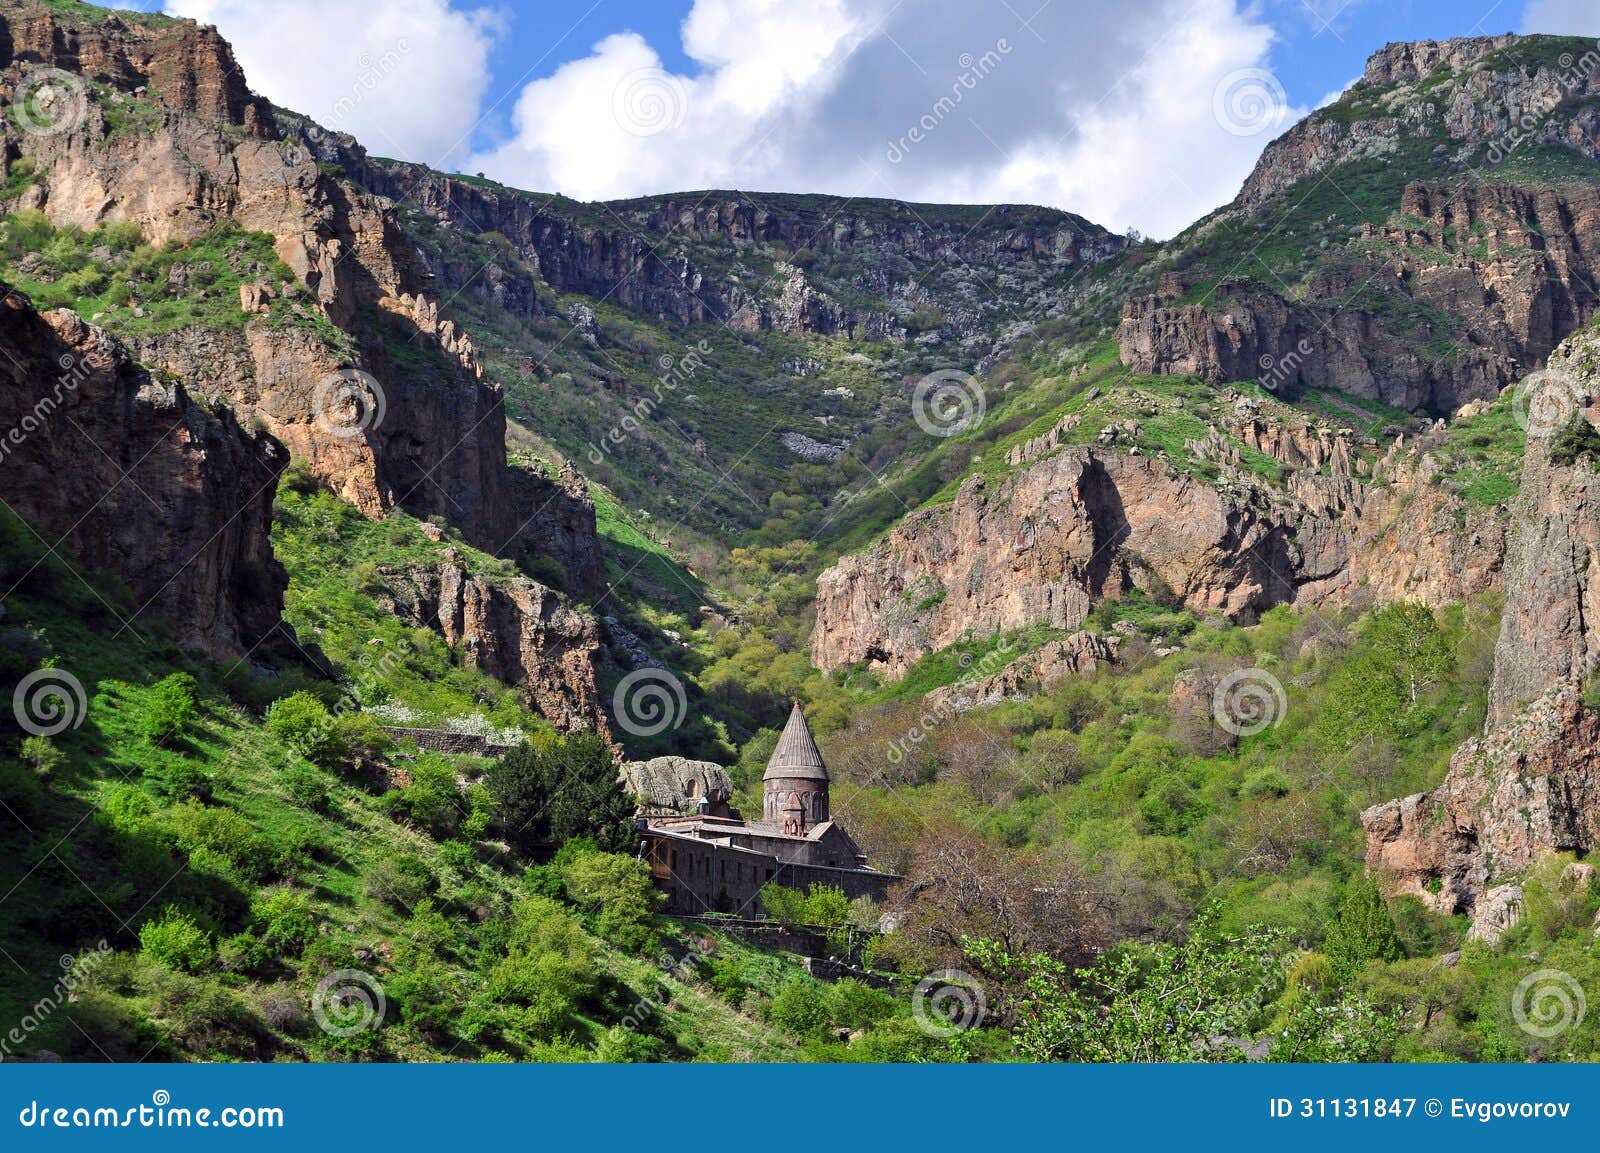 sacred monastery of geghard in armenia